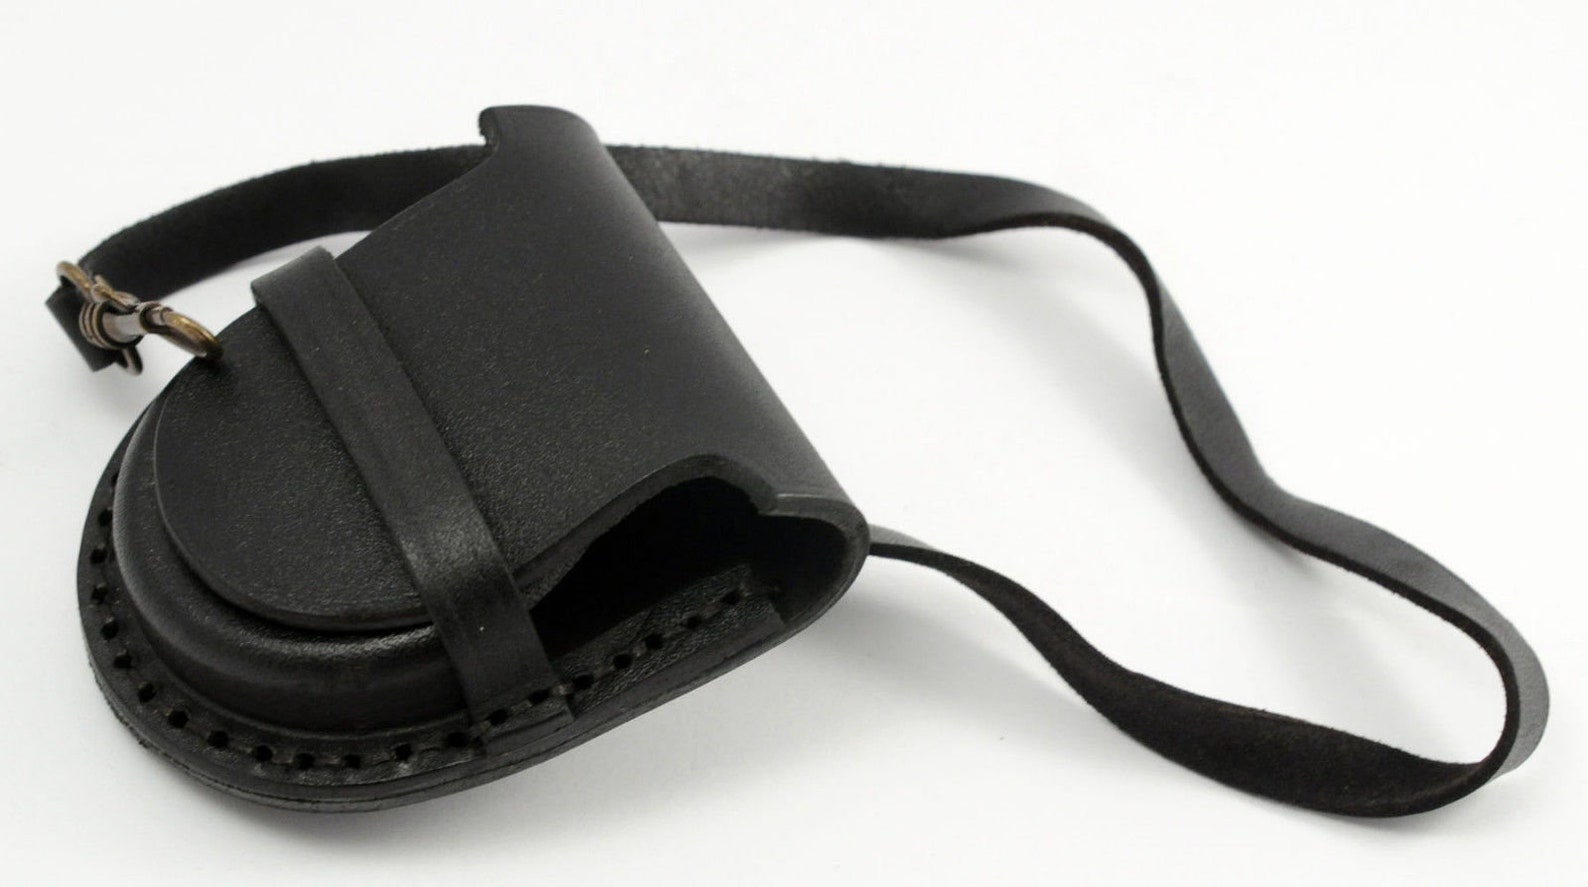 Strap new genuine leather pocket watch belt pouch bag CASE 50 | Etsy